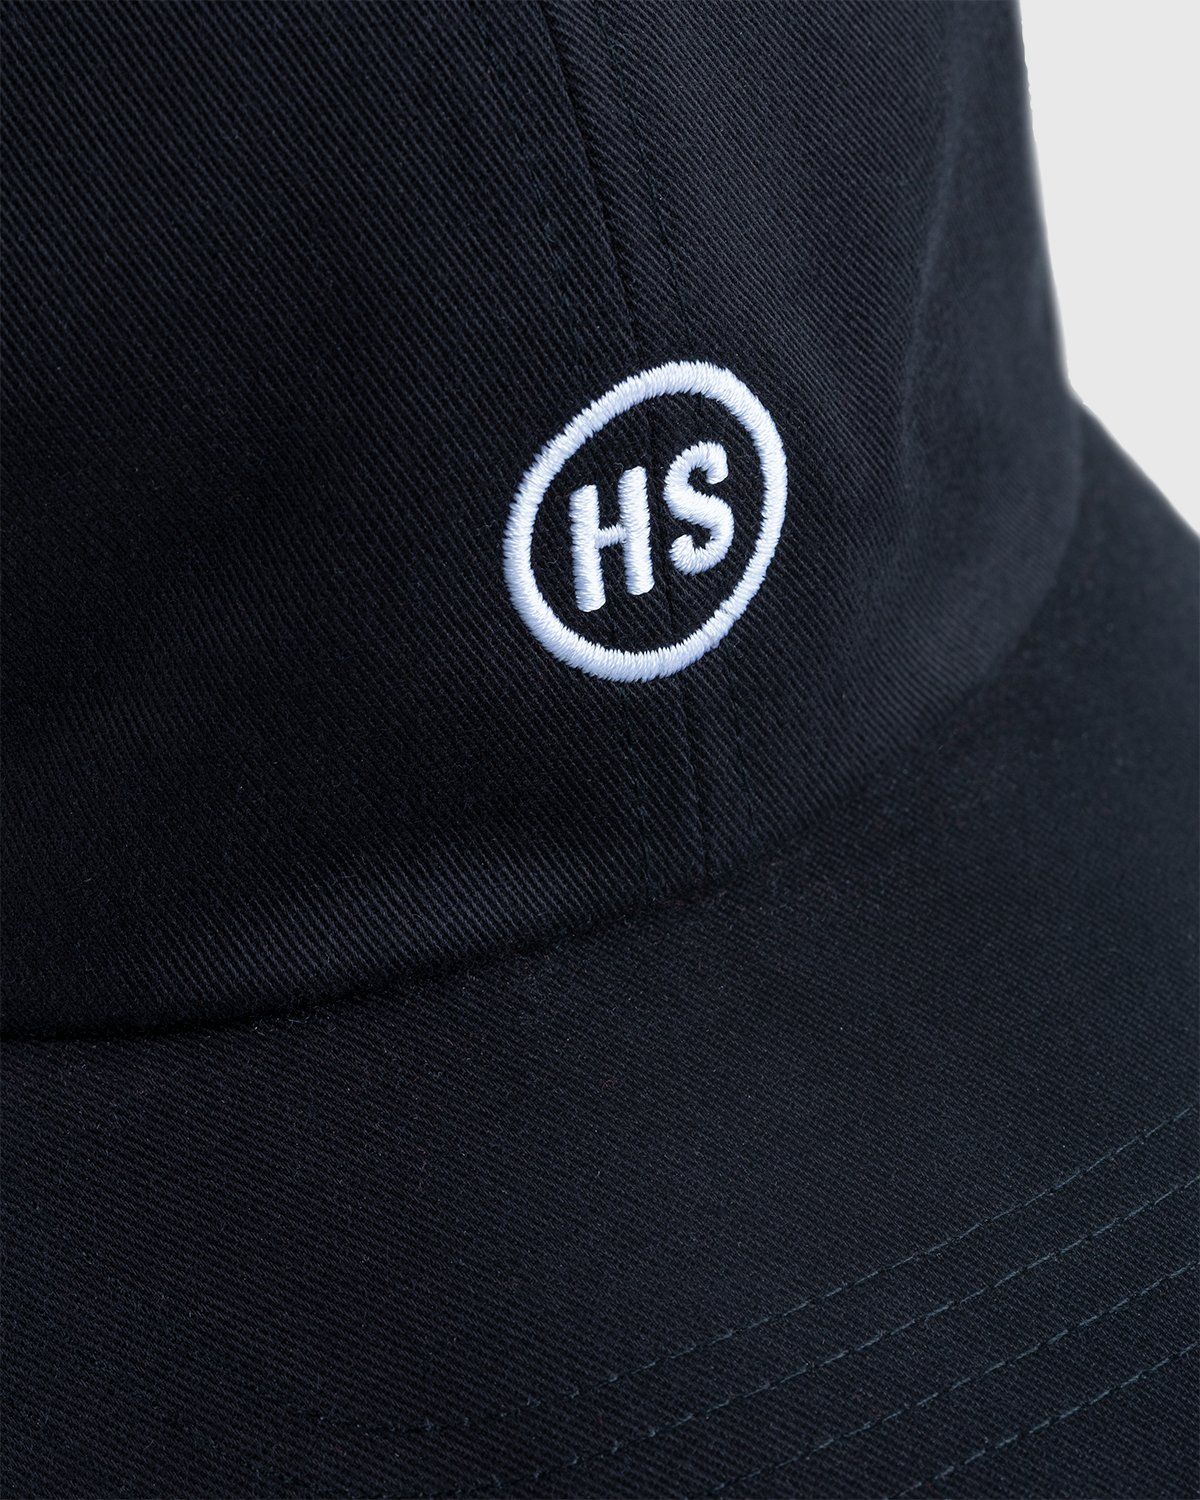 Highsnobiety – Baseball Cap Black - Caps - Black - Image 5